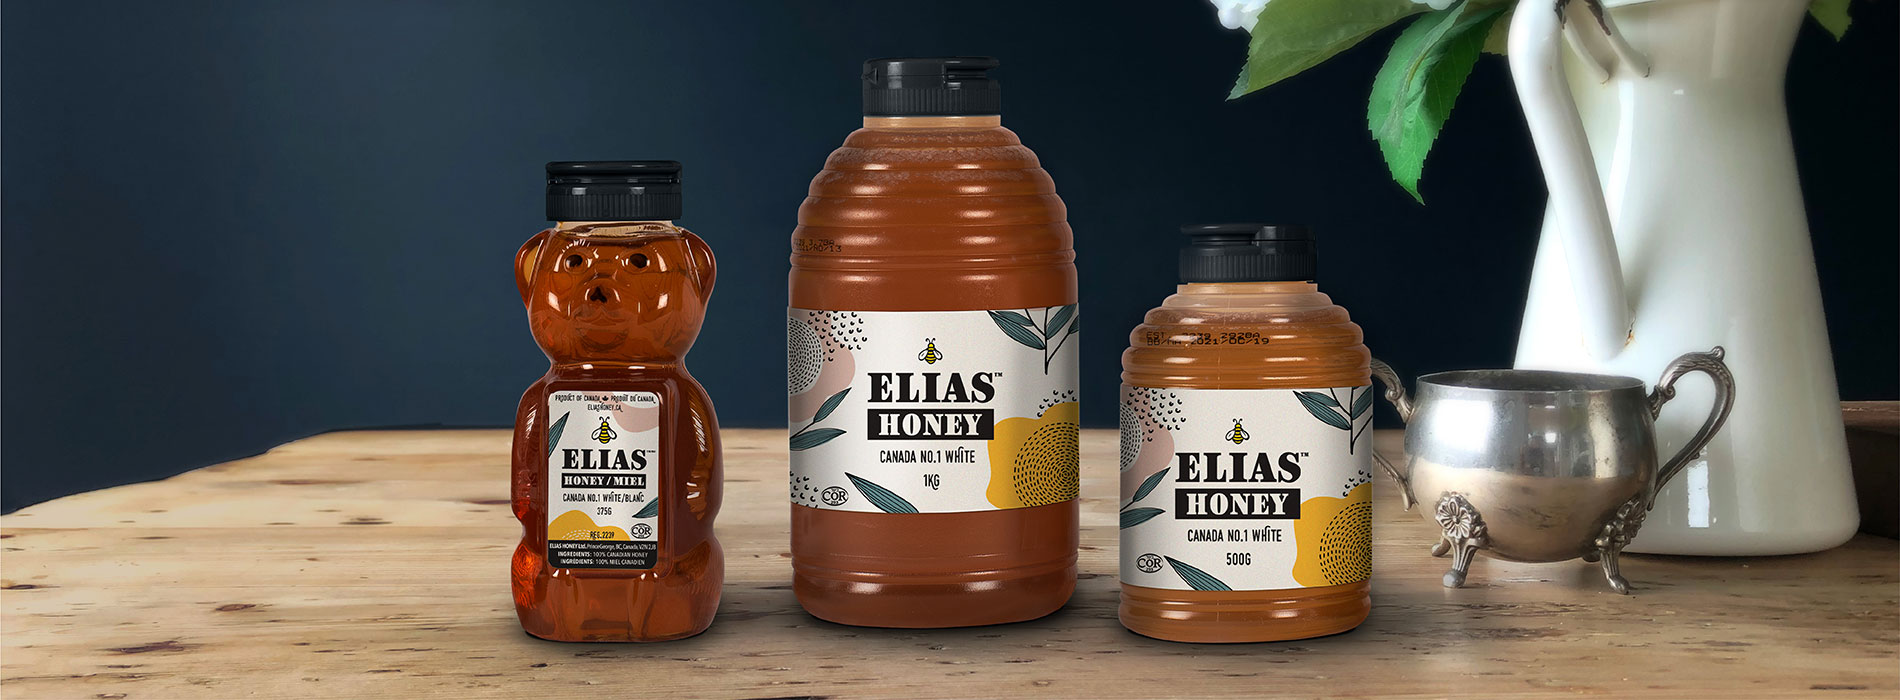 Elias honey squeeze bottles on wood table